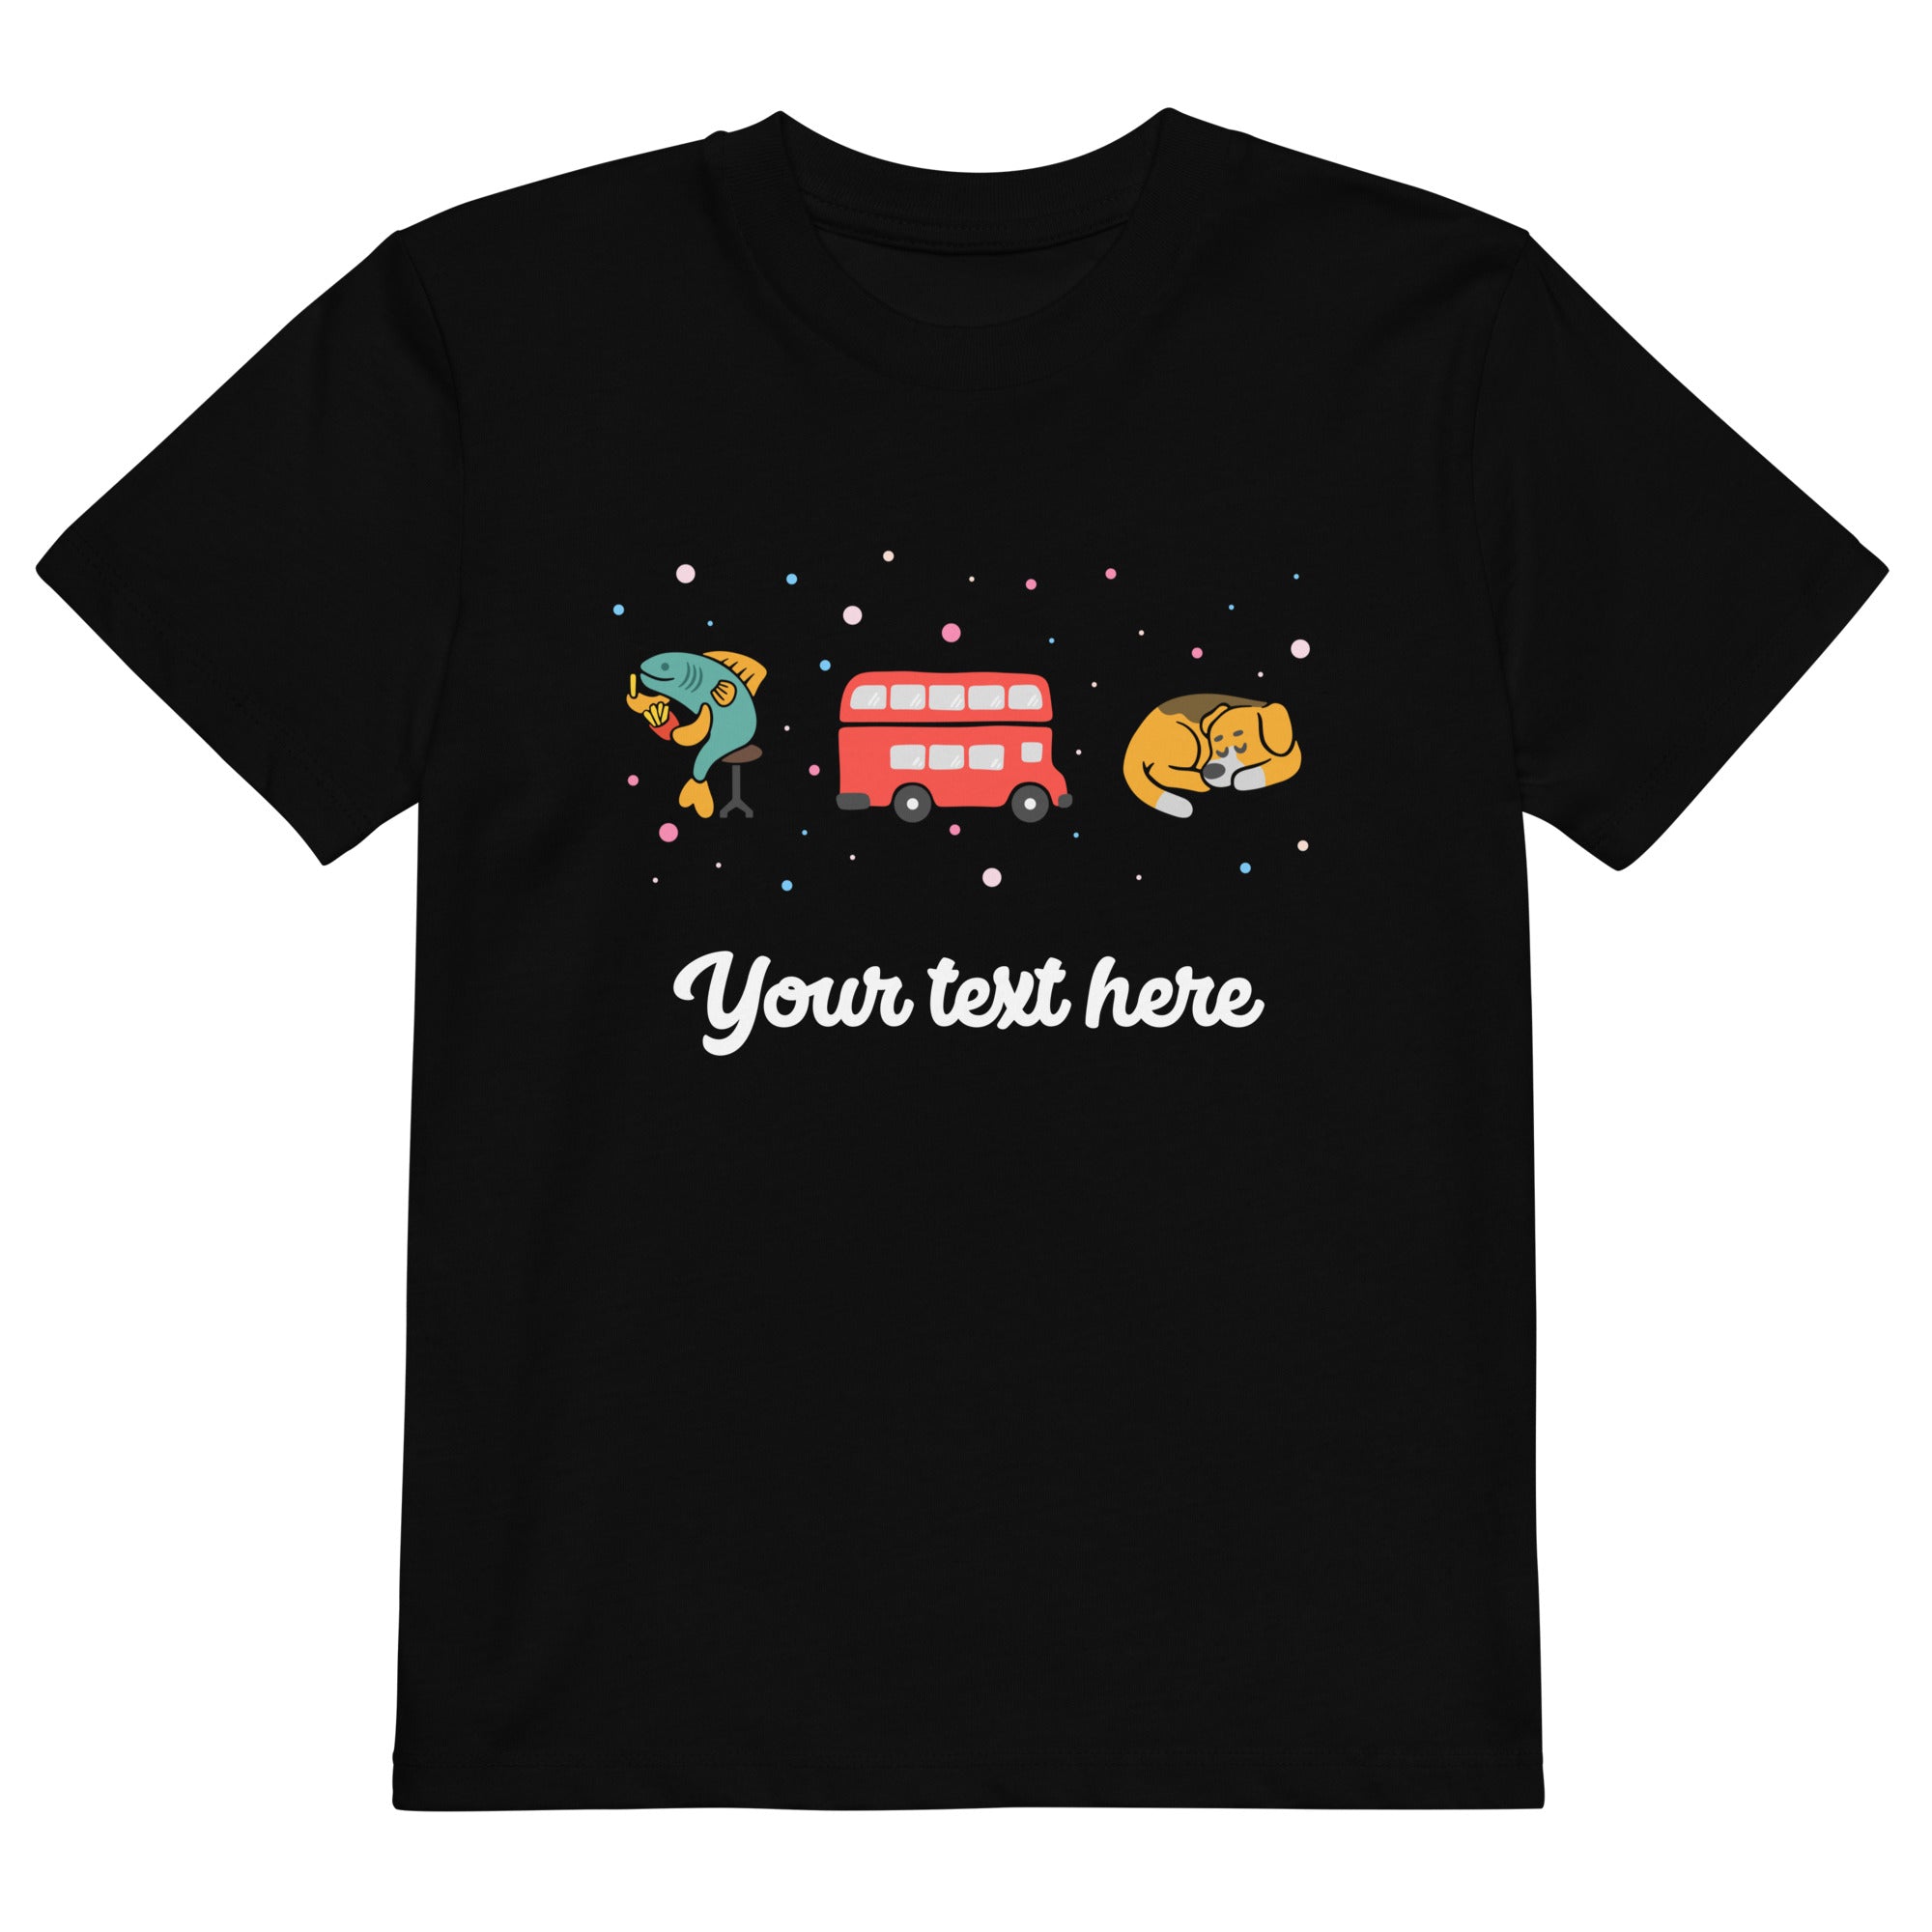 Personalised Custom Text - Organic Cotton Kids T-Shirt - London Doodles - Fish & Chips / Bus / Corgi - Black 1